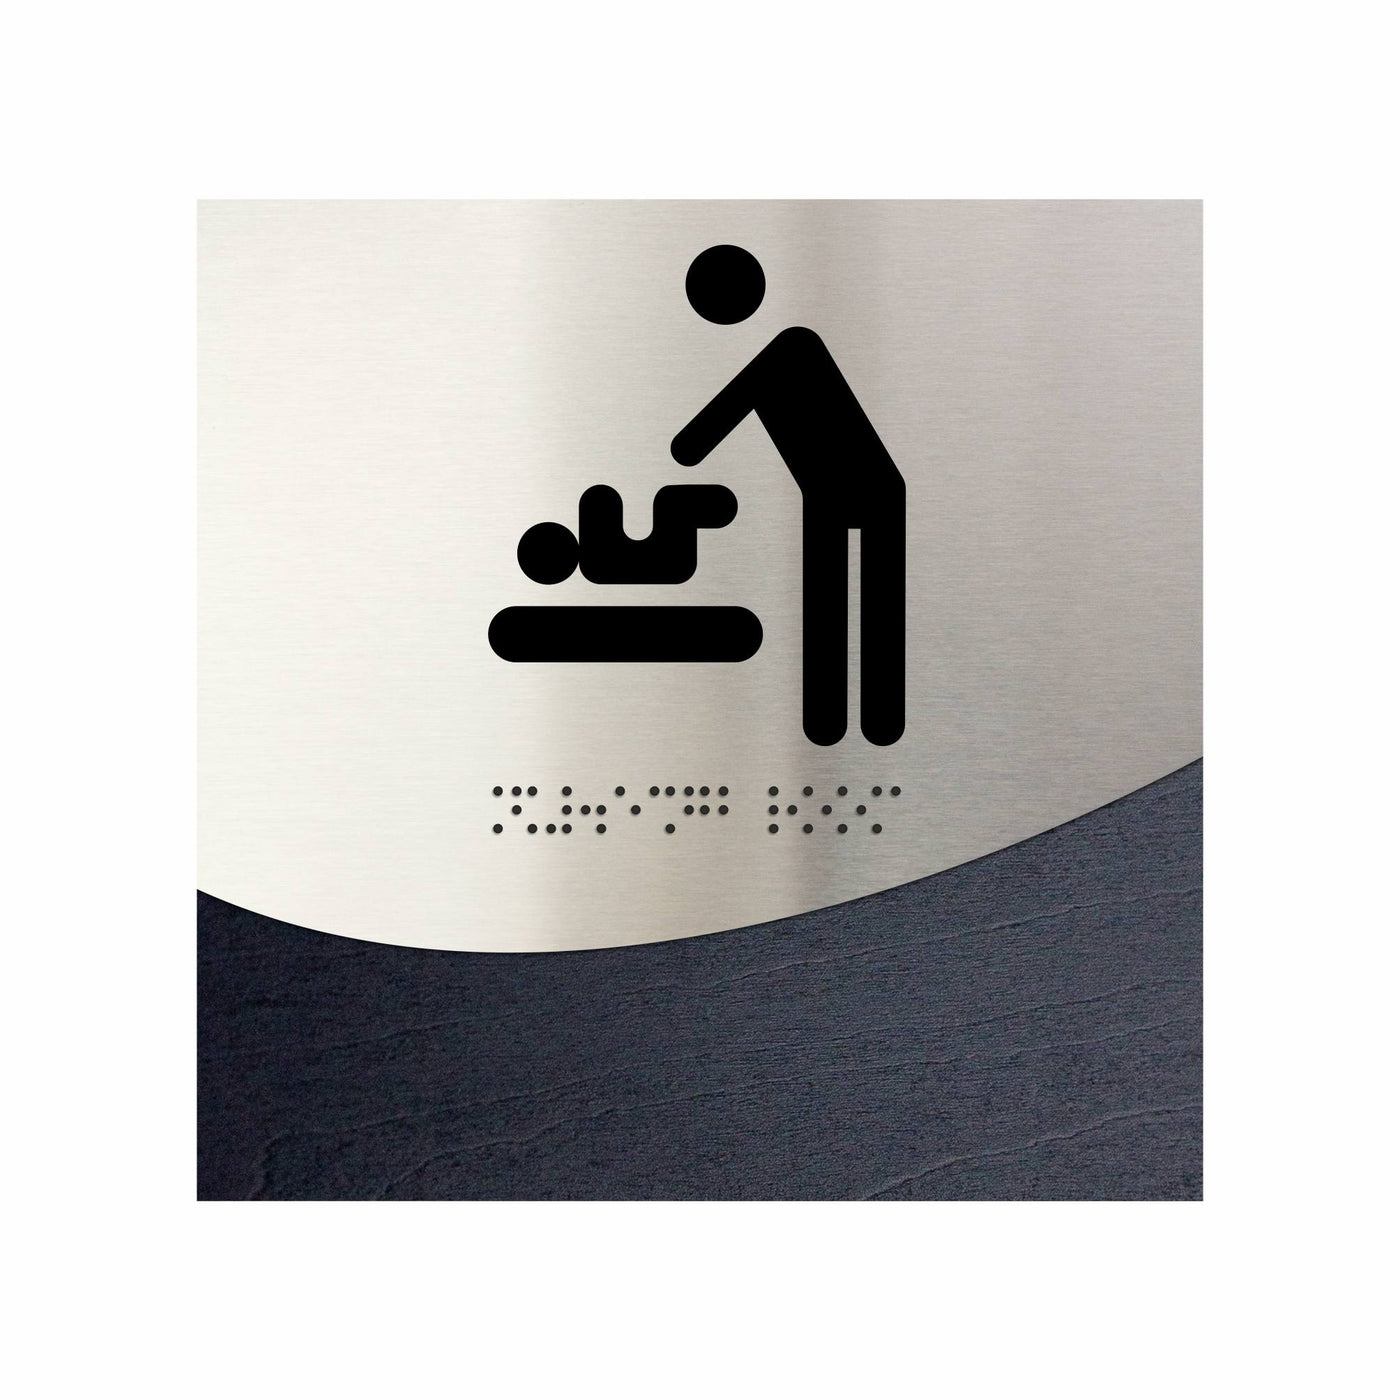 Baby Change Sign for Mother — "Jure" Design